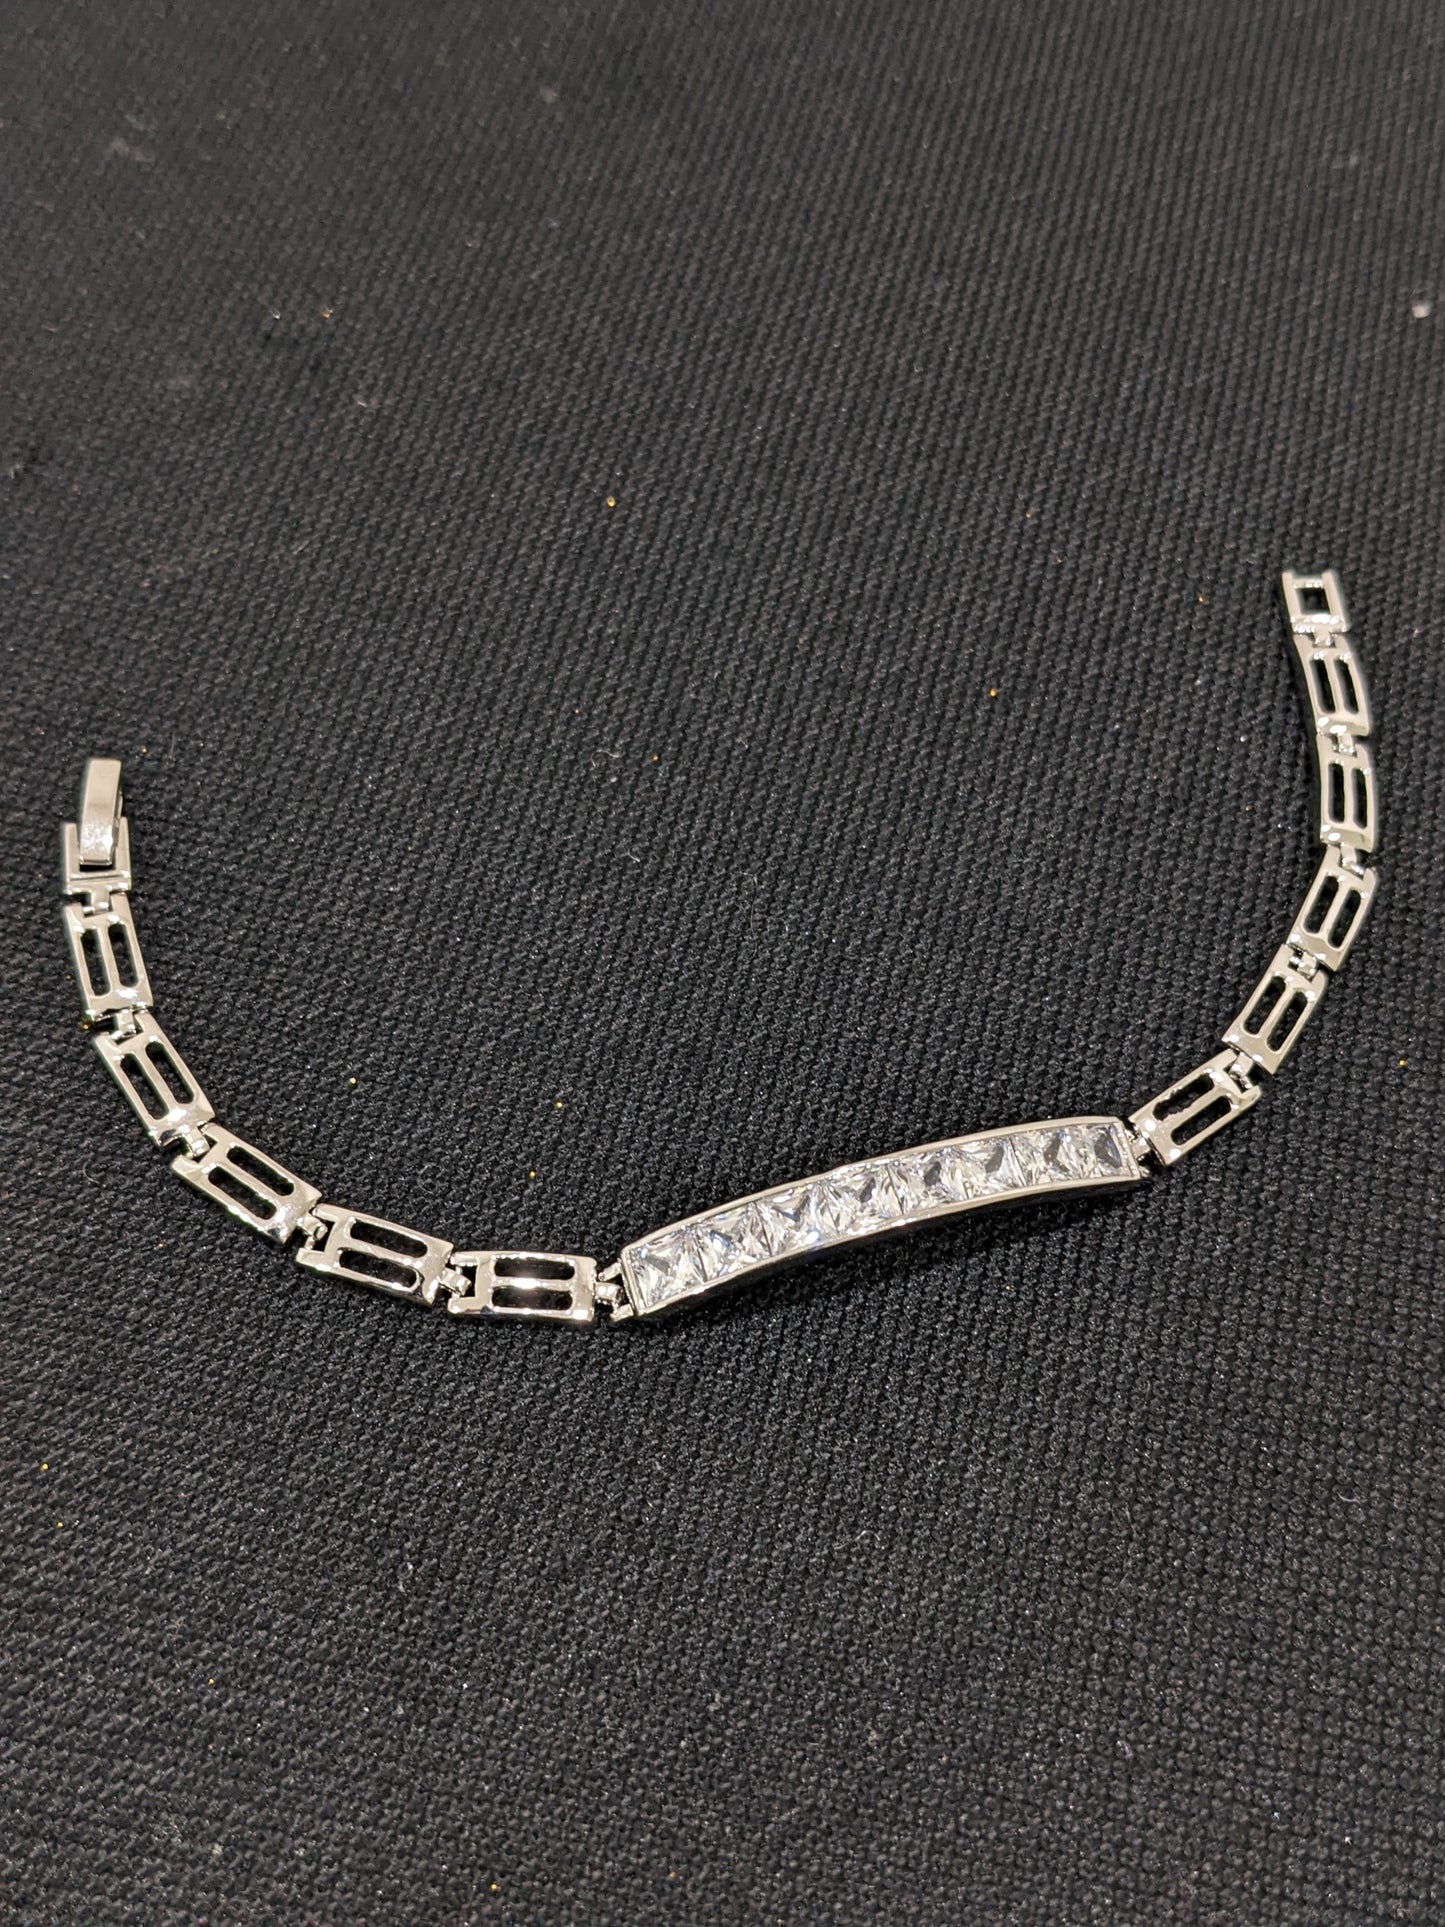 Rectangle center white CZ stone Bracelet - Simpliful